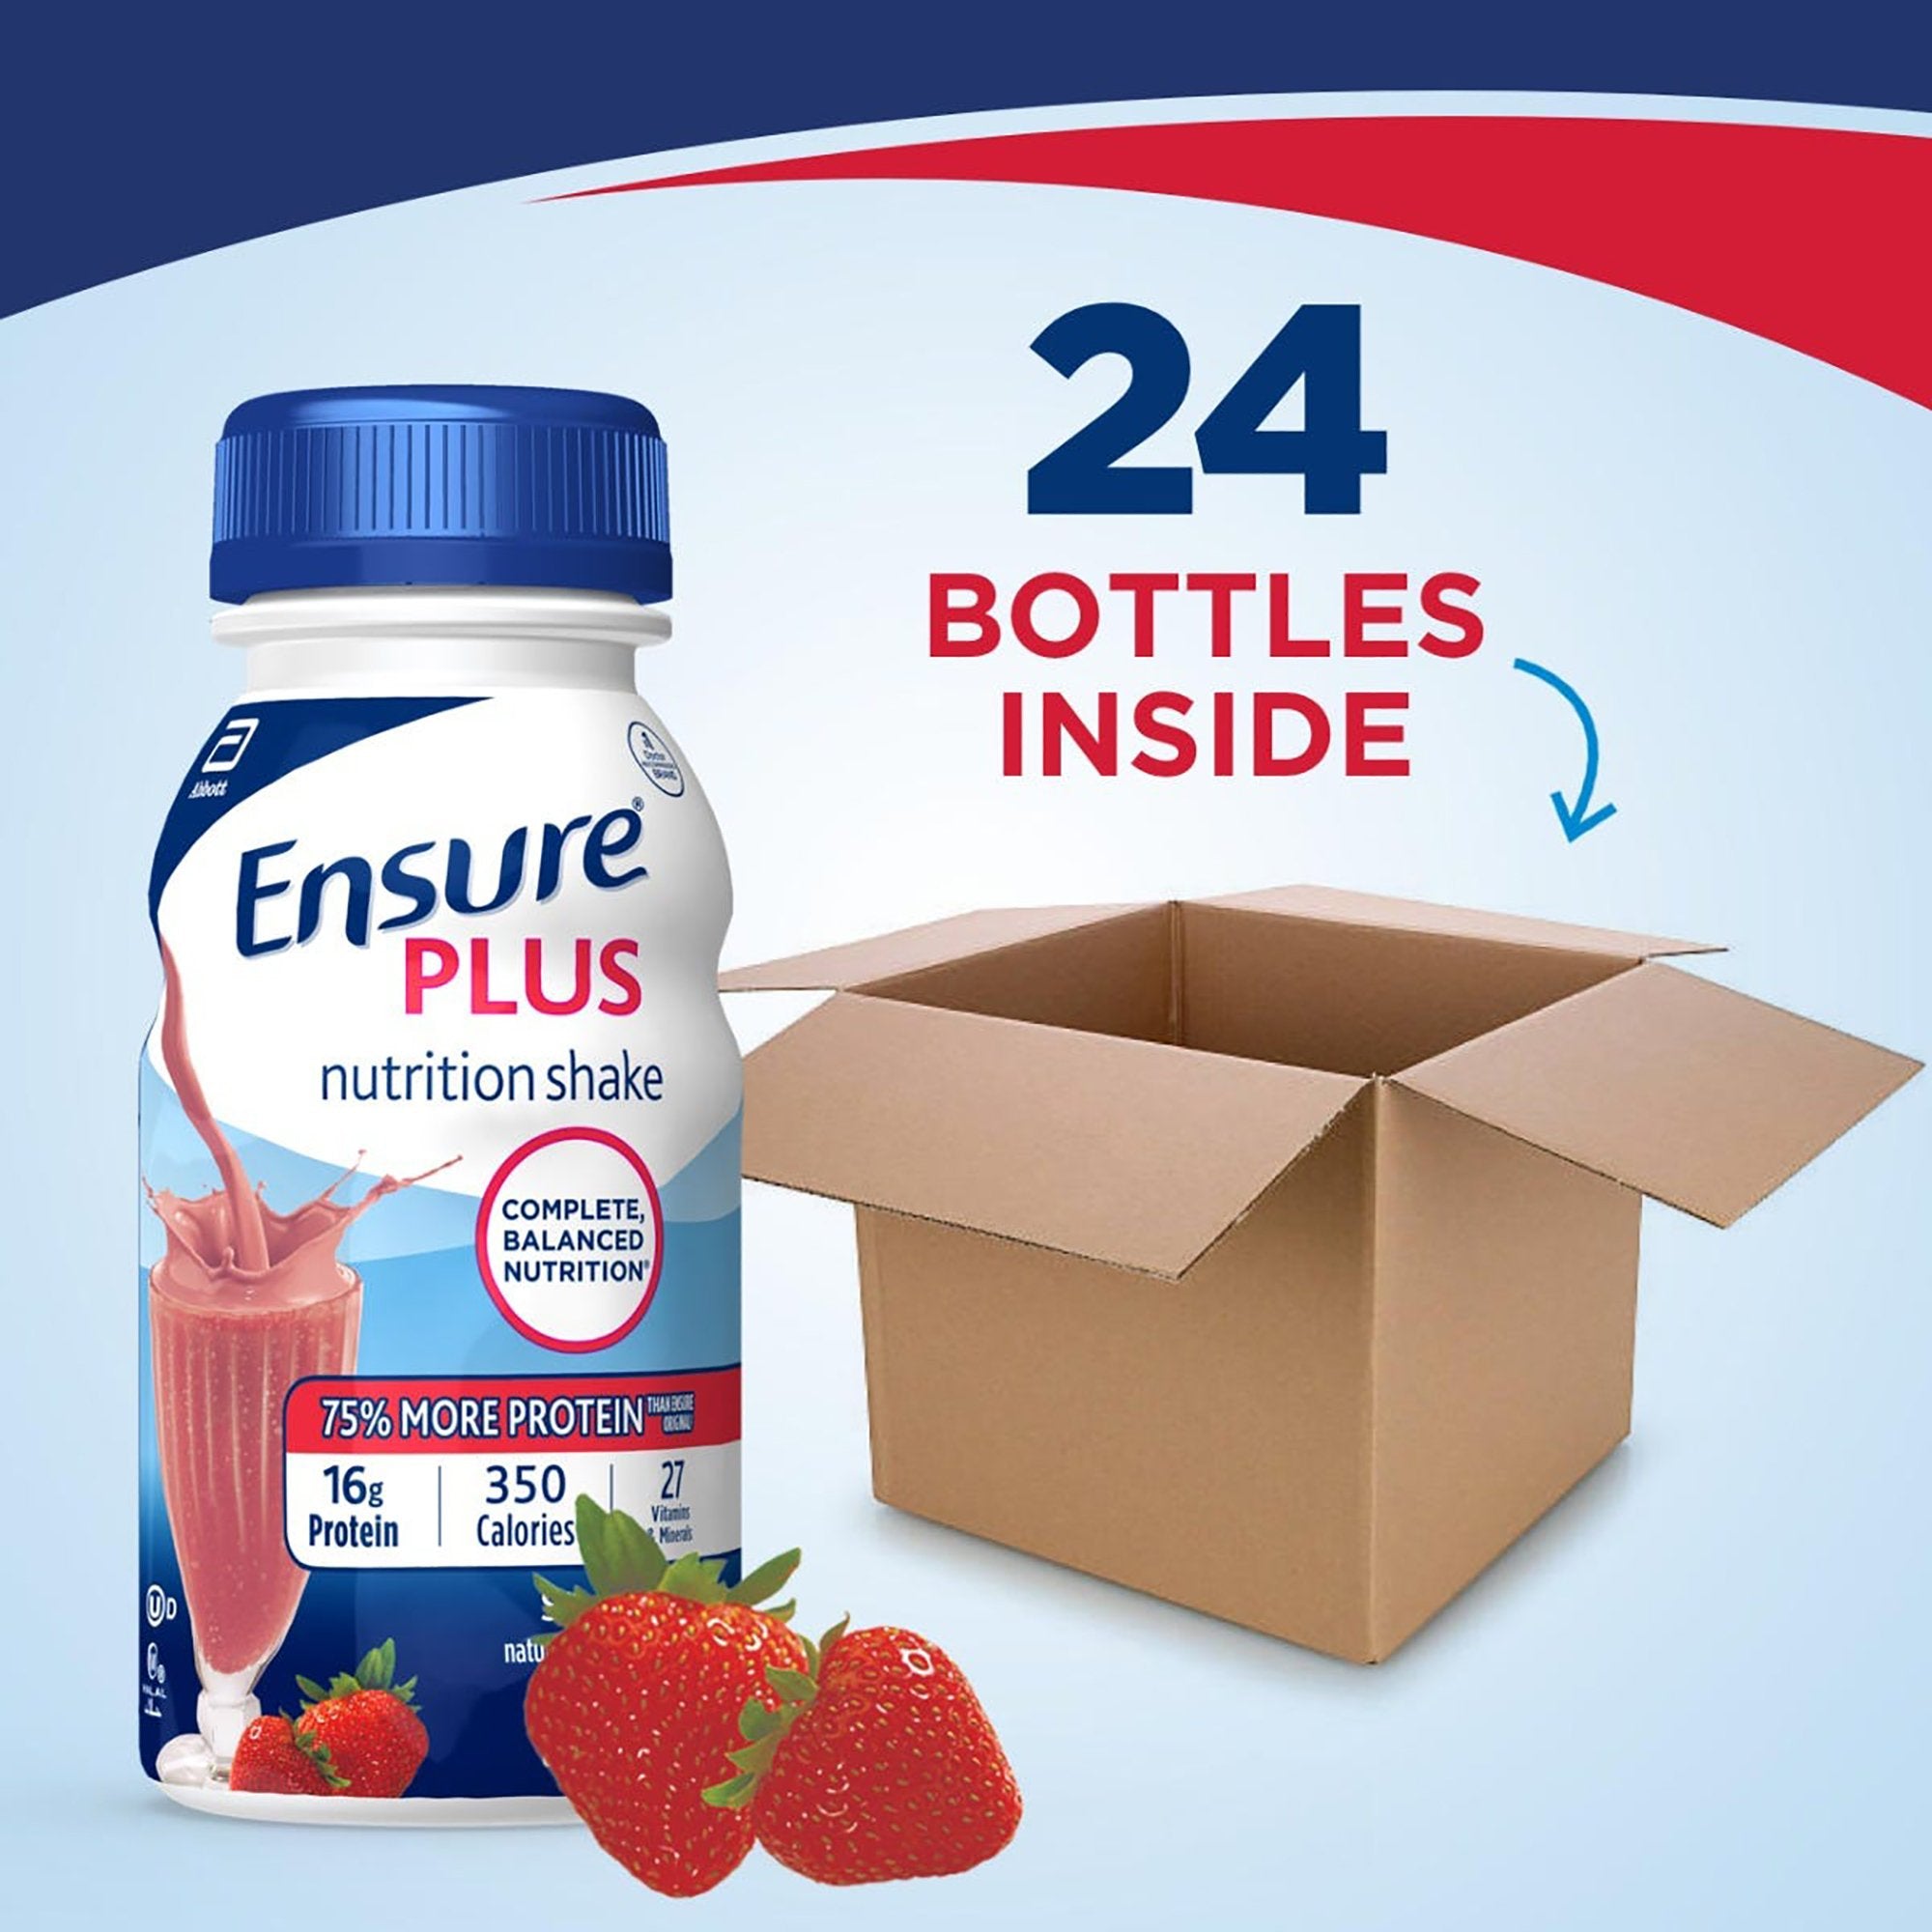 Ensure® Plus Nutrition Shake, Strawberry, 8-ounce bottle (24 Units)